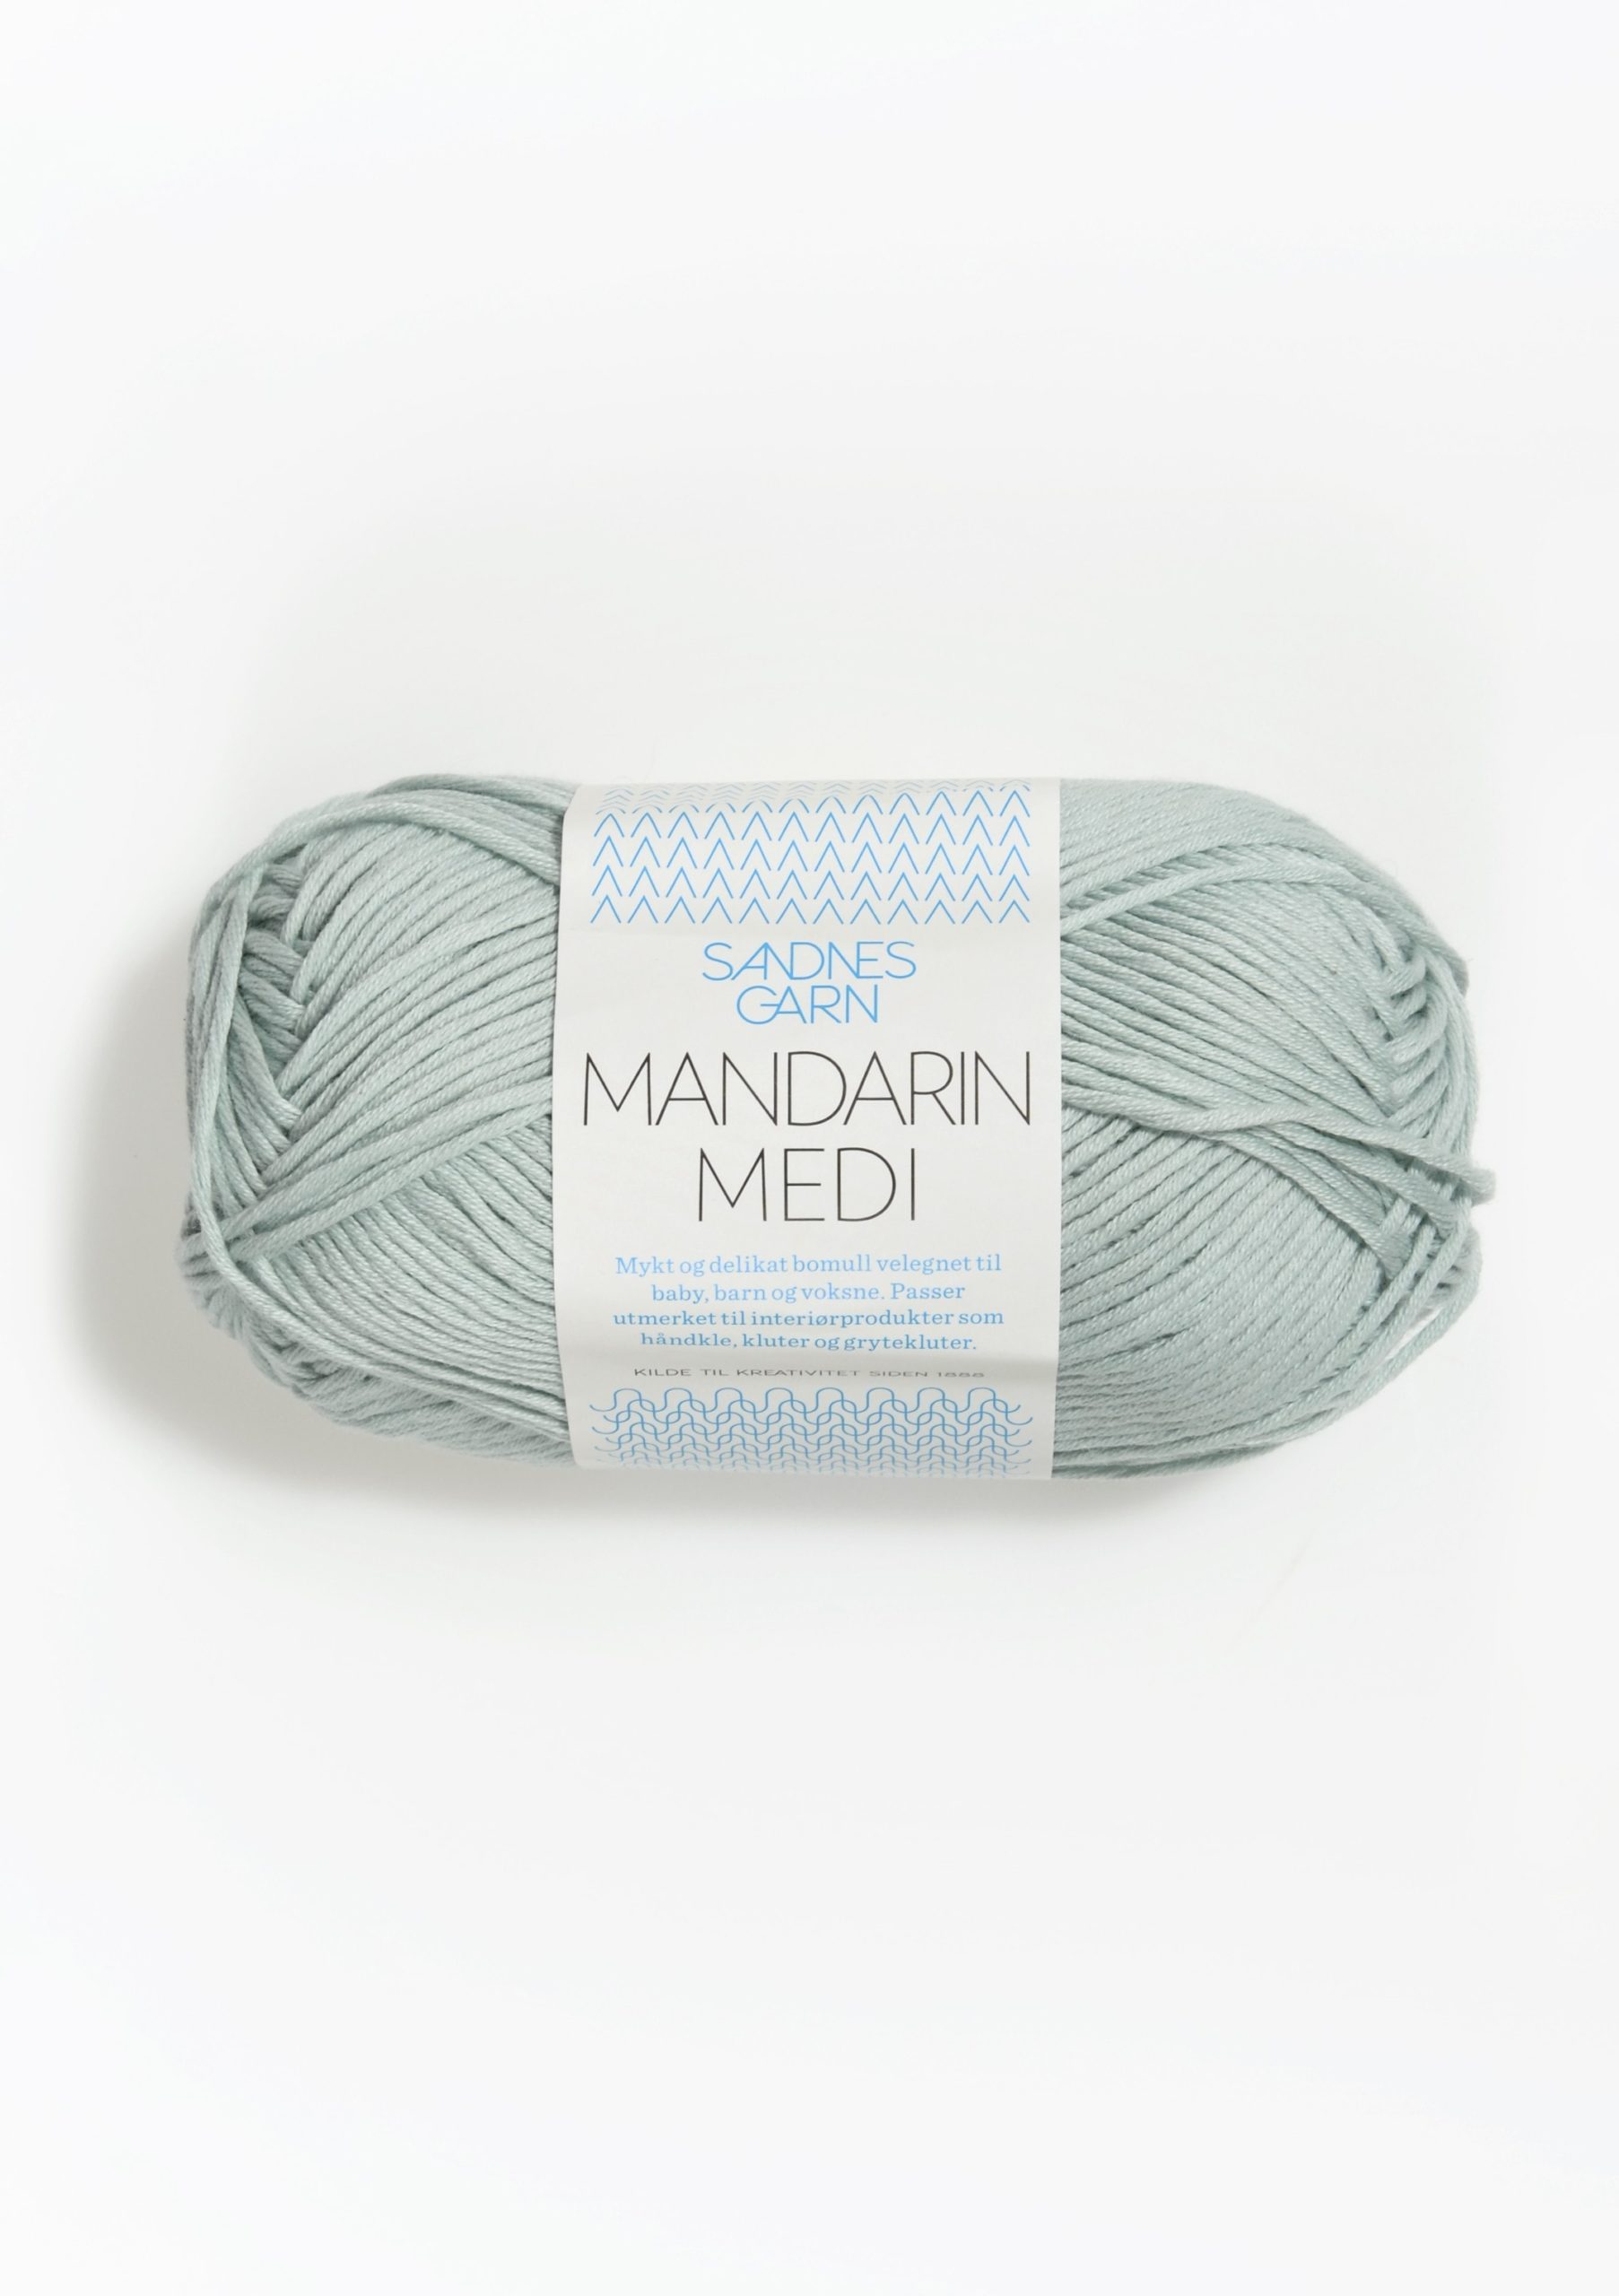 Mandarin Medi (cotton) by Sandnes Garn